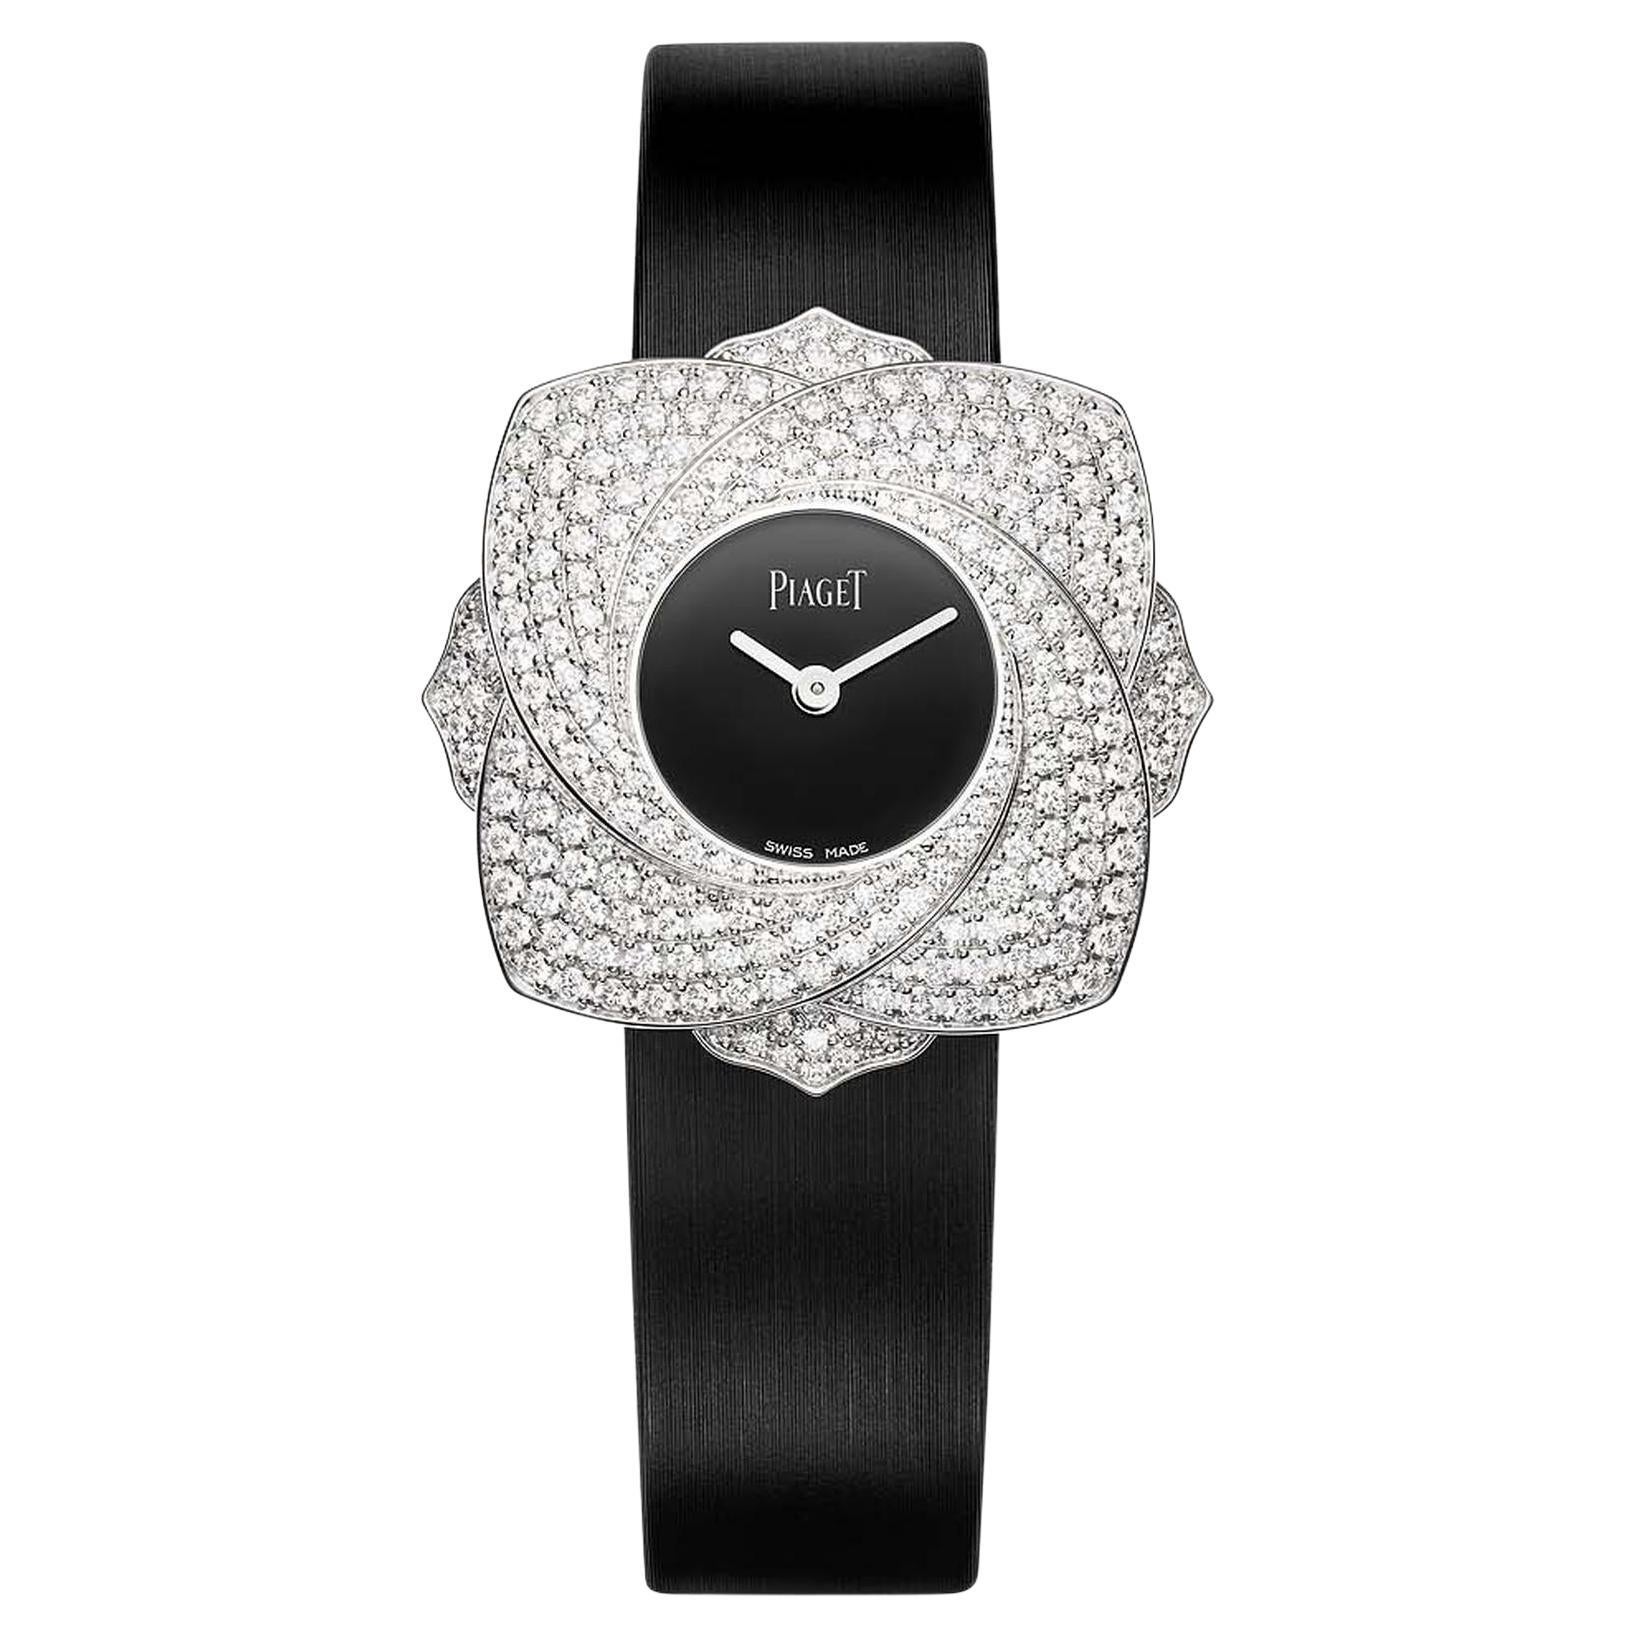 Piaget Montre-bracelet Limelight Blooming en or blanc et diamants roses